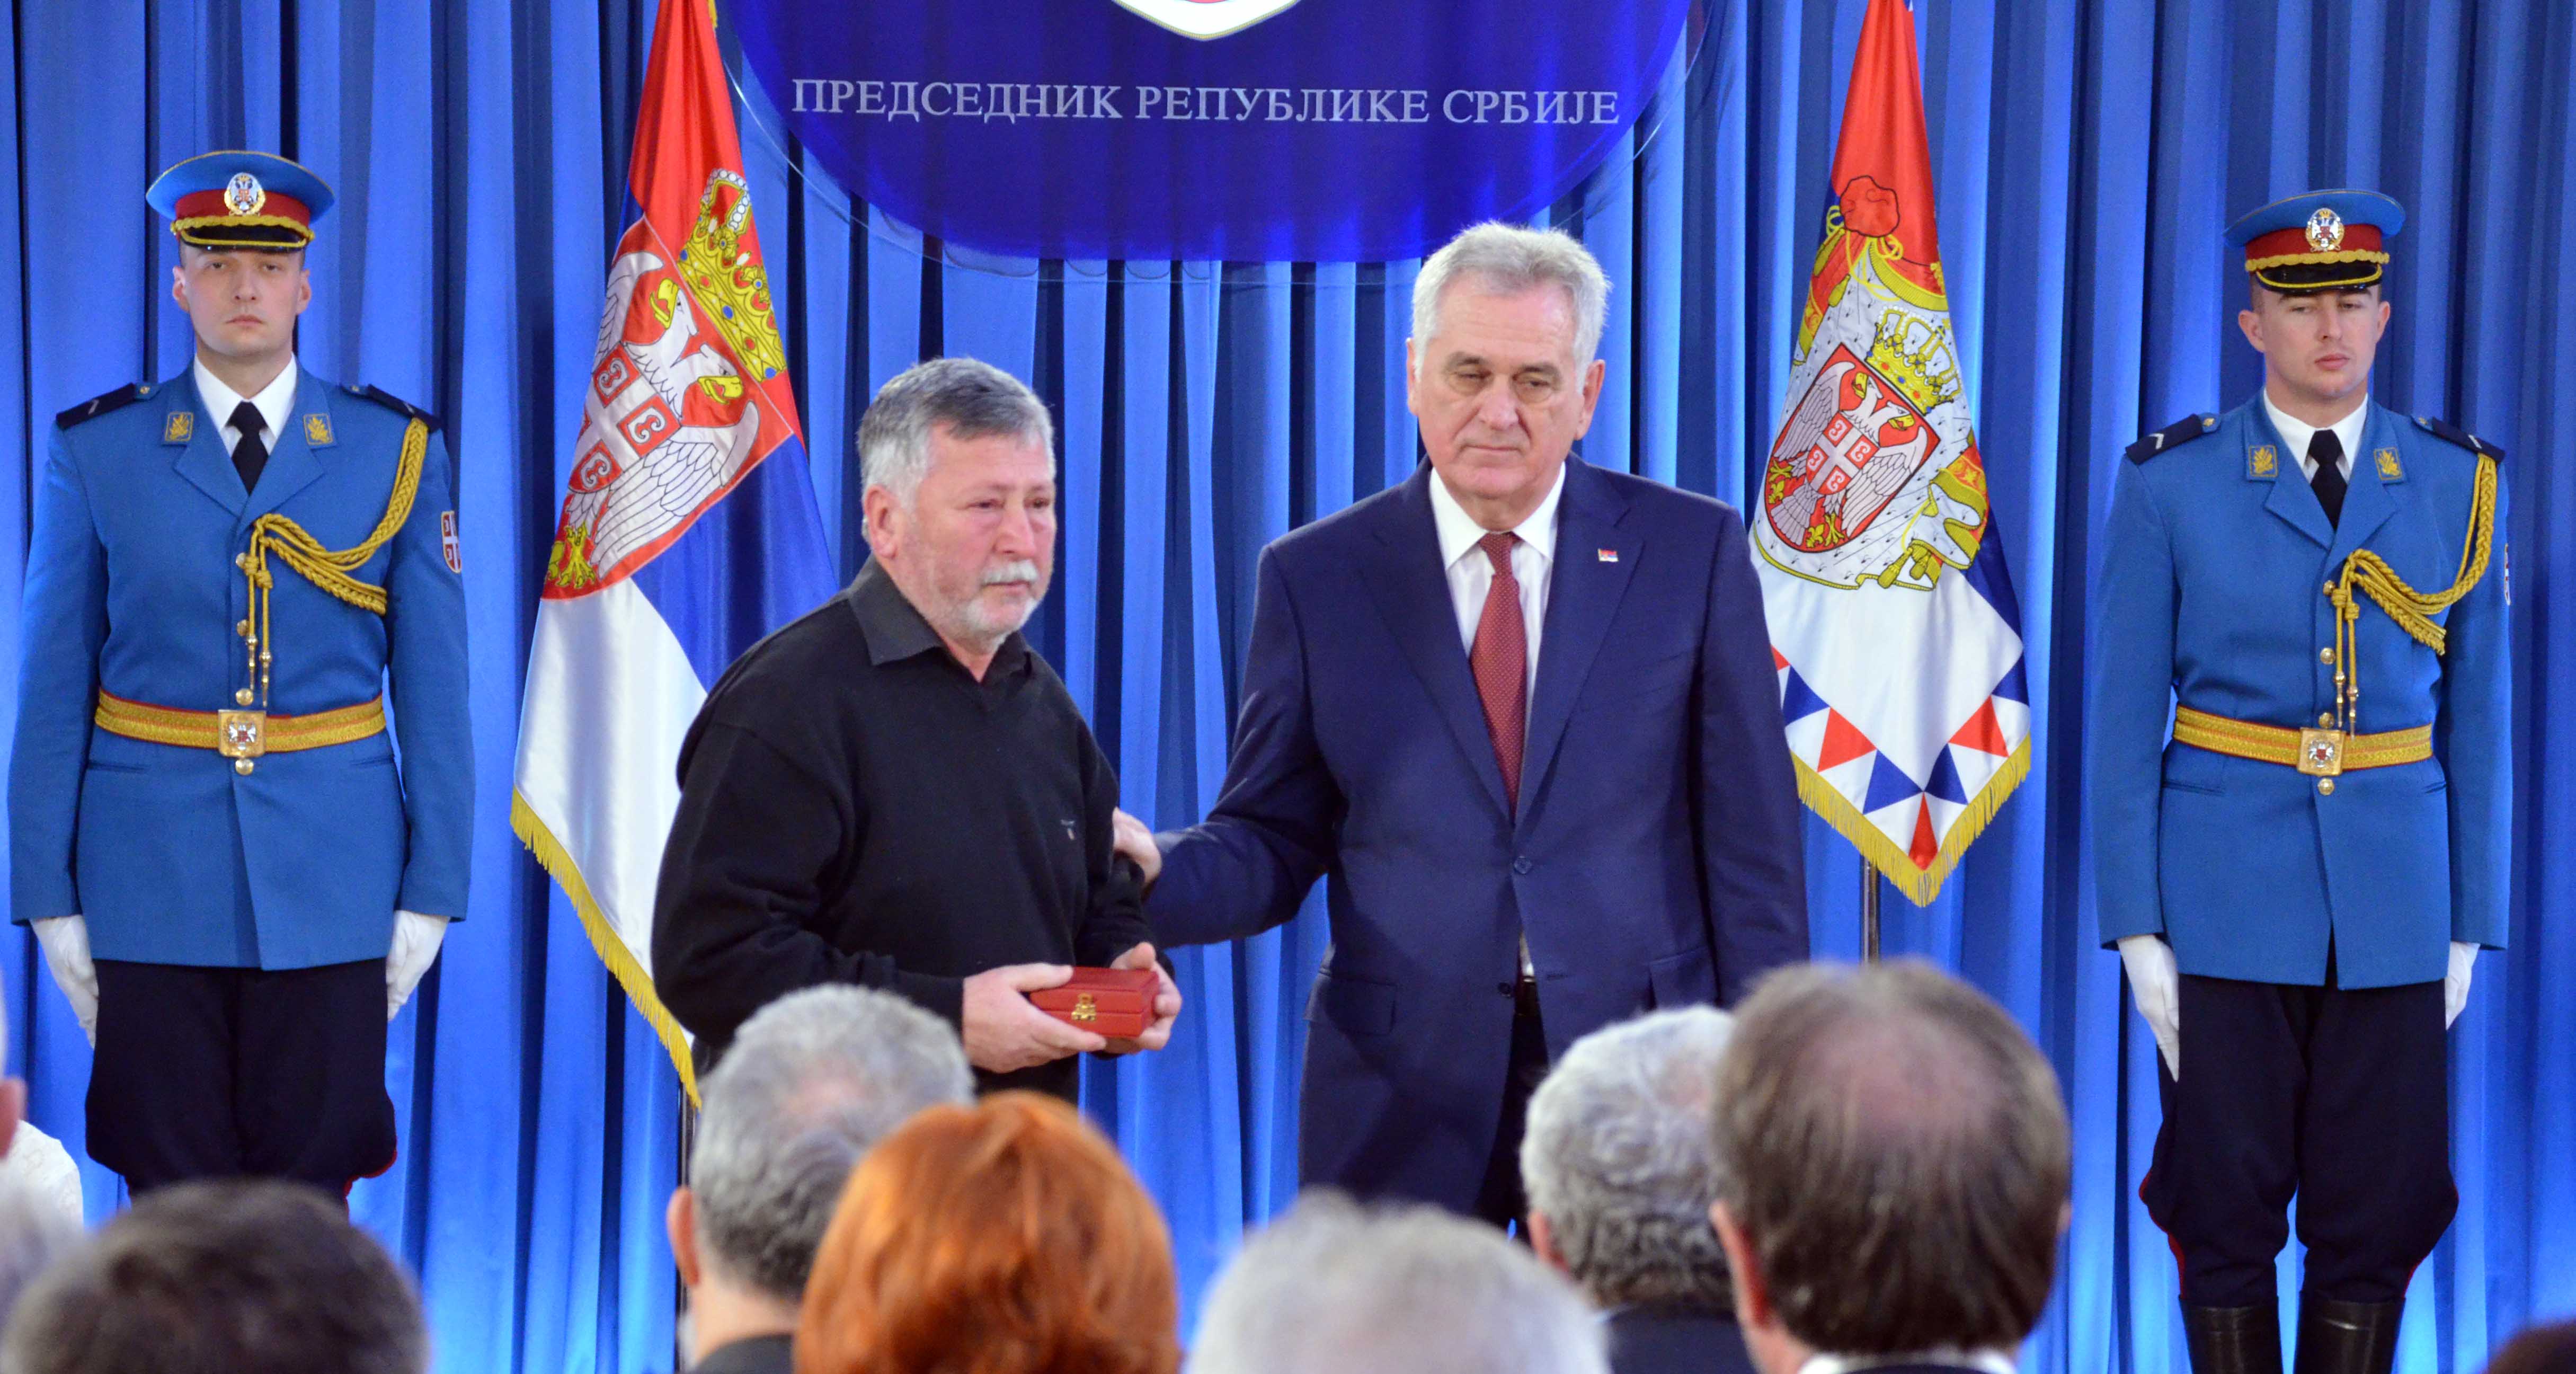 Predsednik Nikolić odlikovao zlatanom medaljom pripadnike Ministarstva unutrašnjih poslova